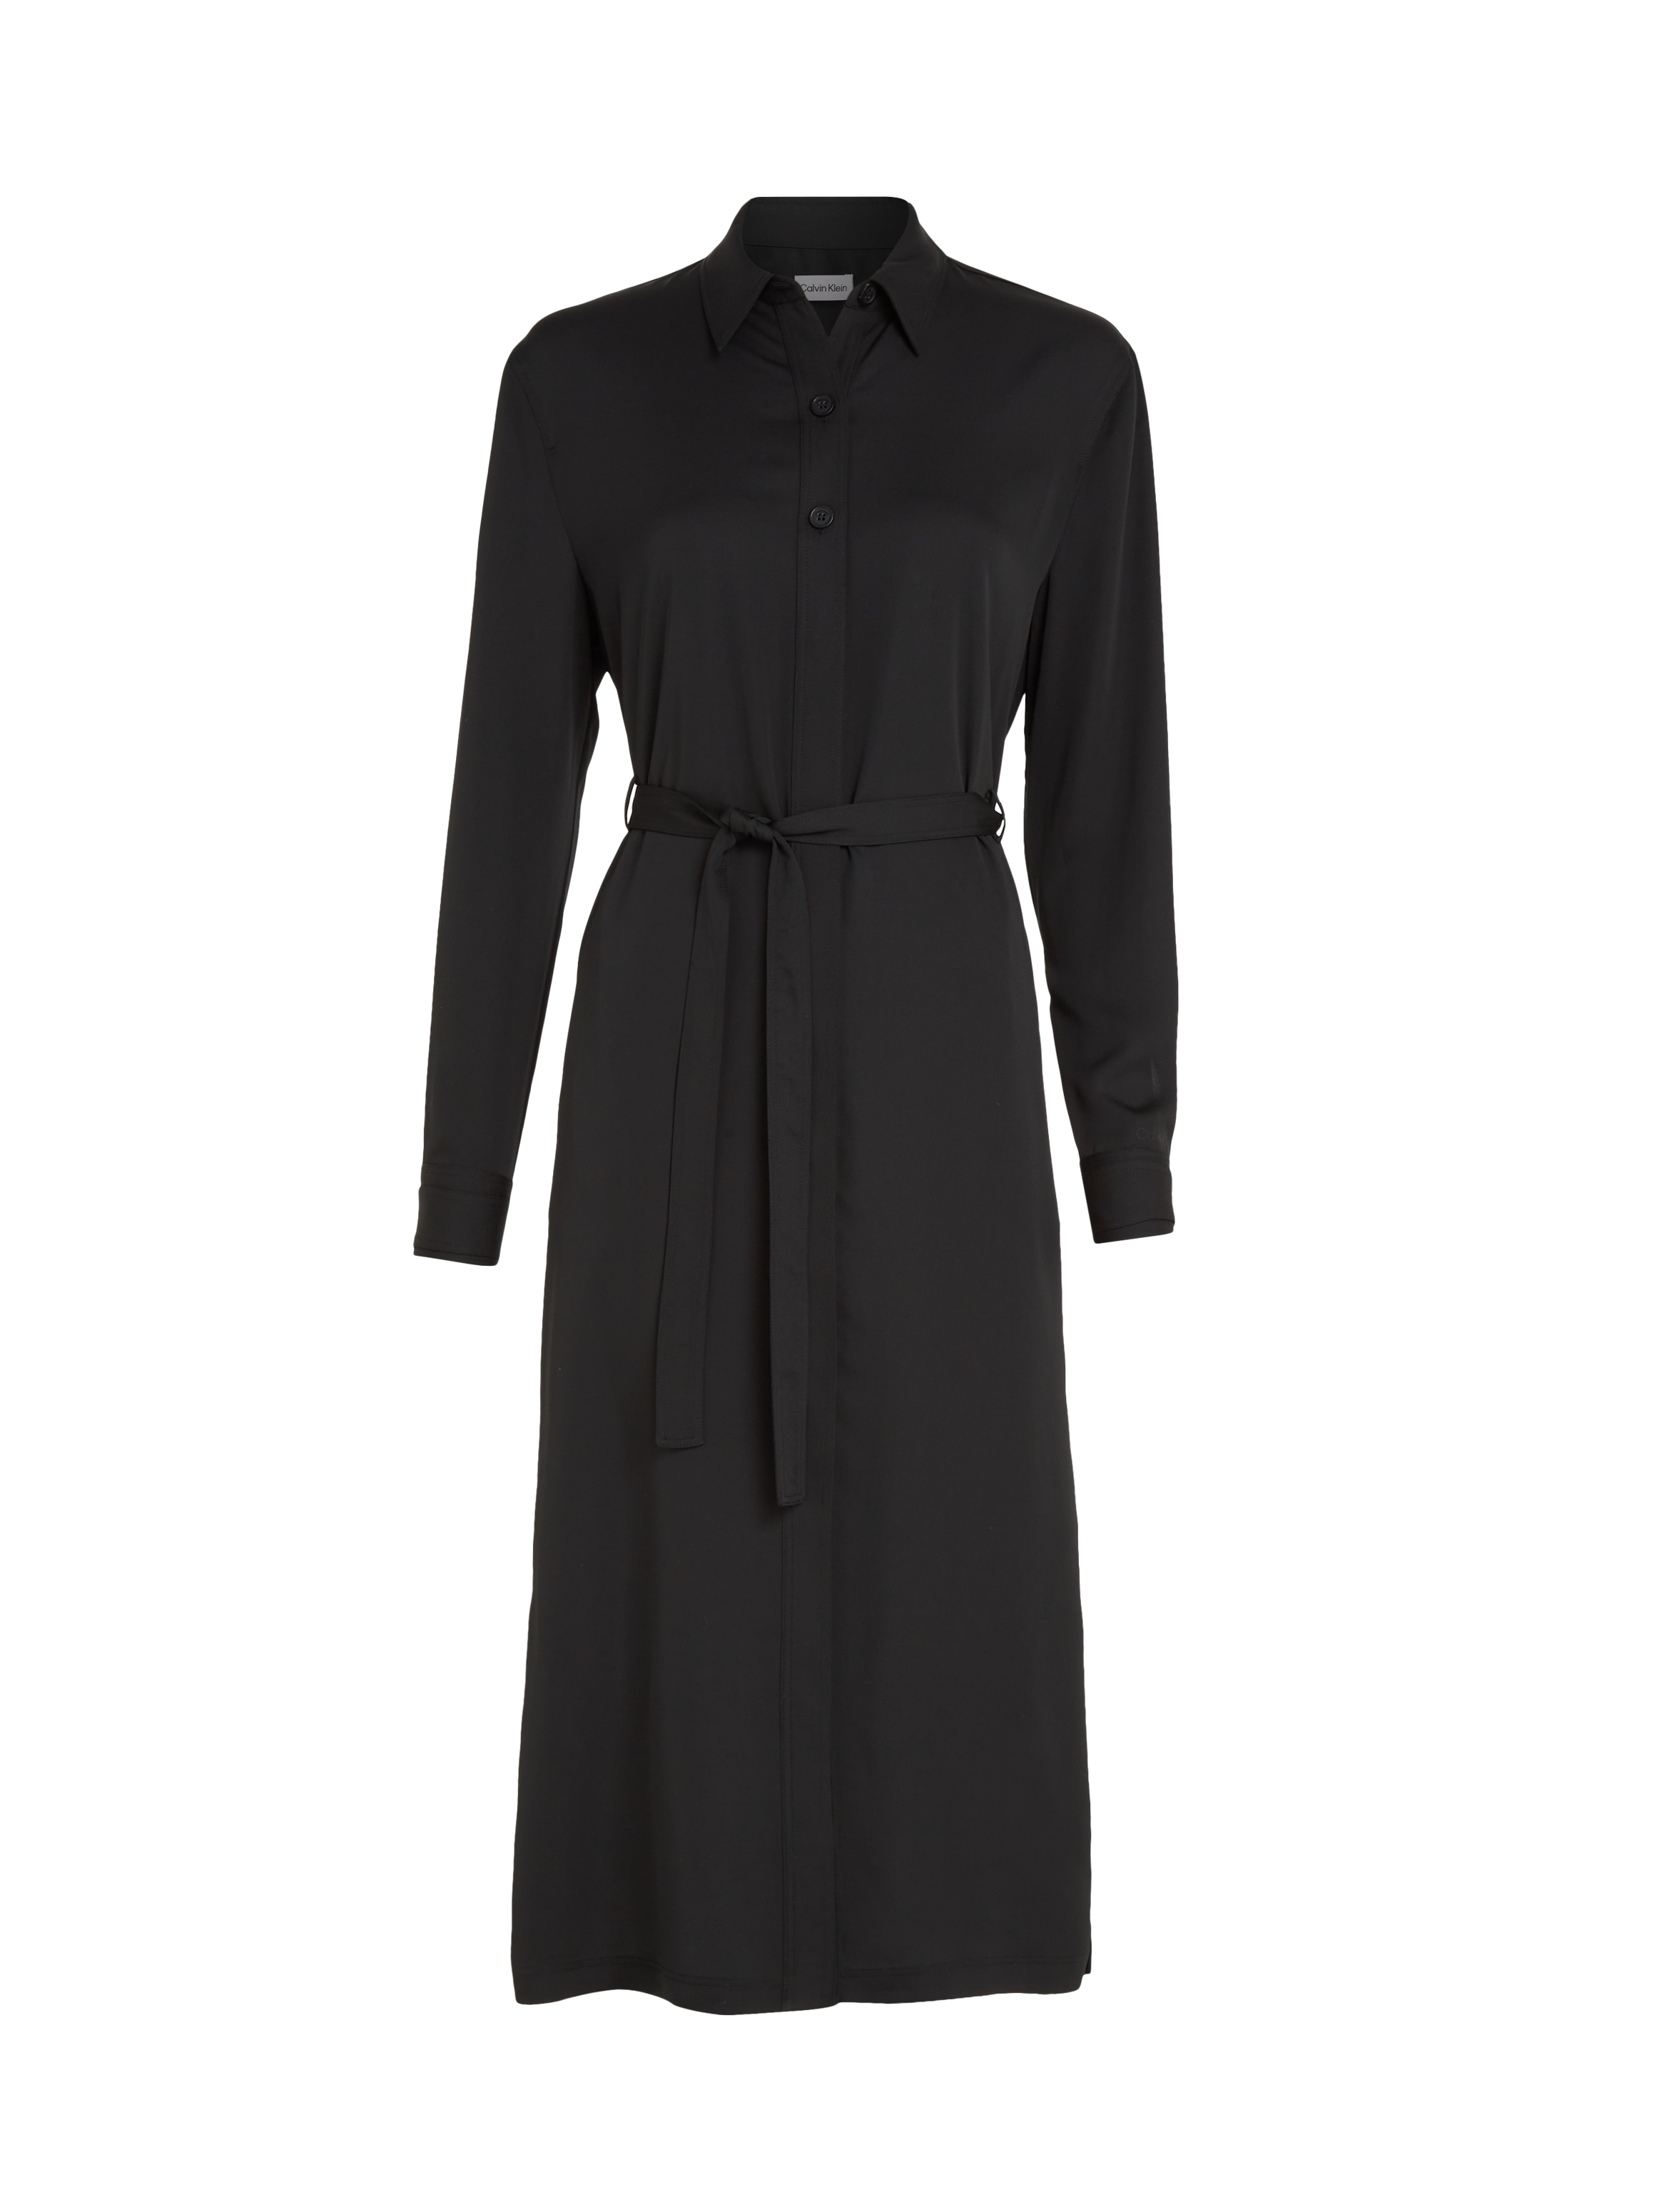 OTTOversand DRESS« SHIRT UTILITY CDC »RECYCLED Hemdblusenkleid bei Calvin Klein